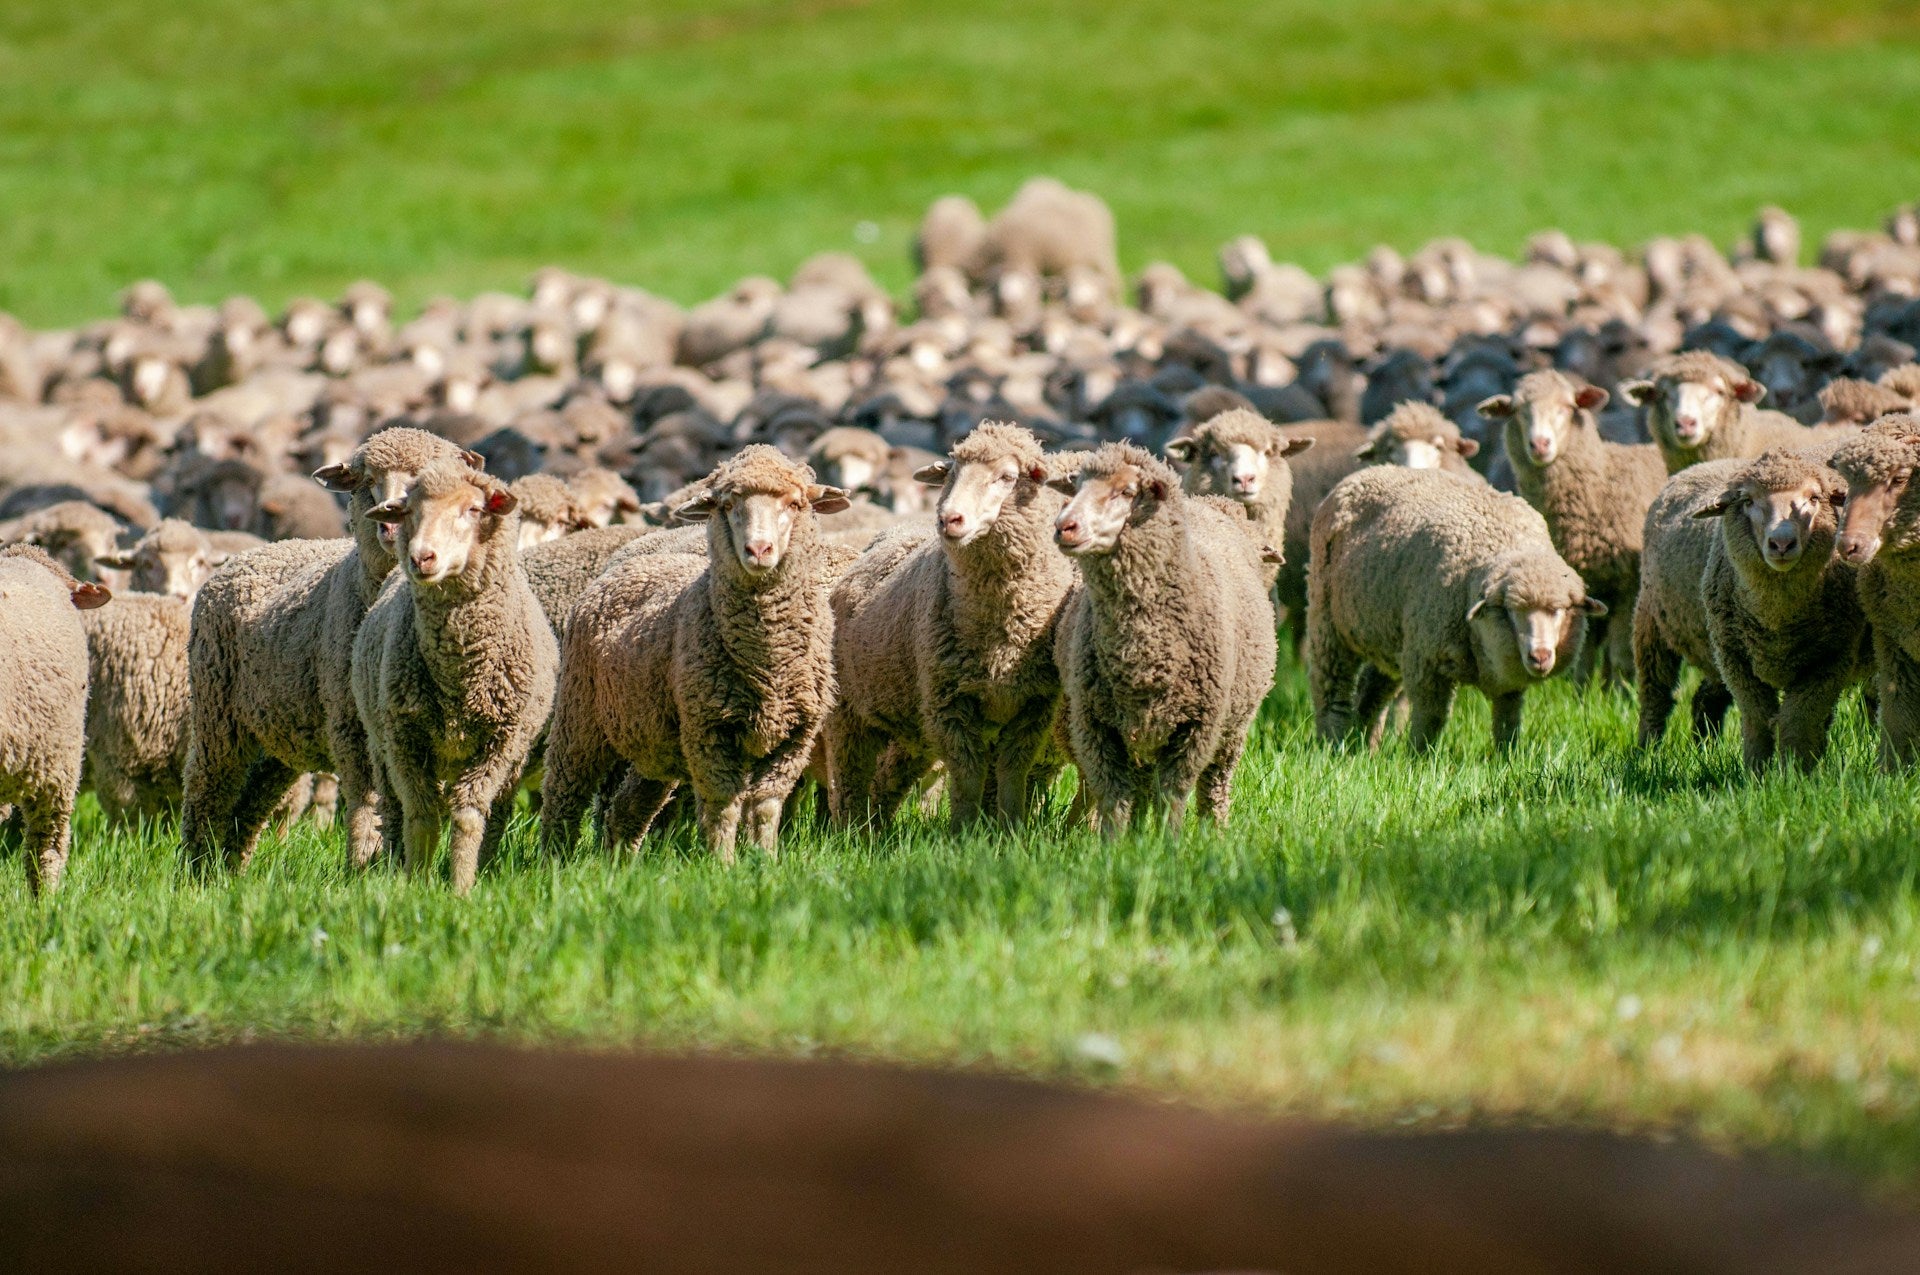 Flock of Merino sheep in Australia